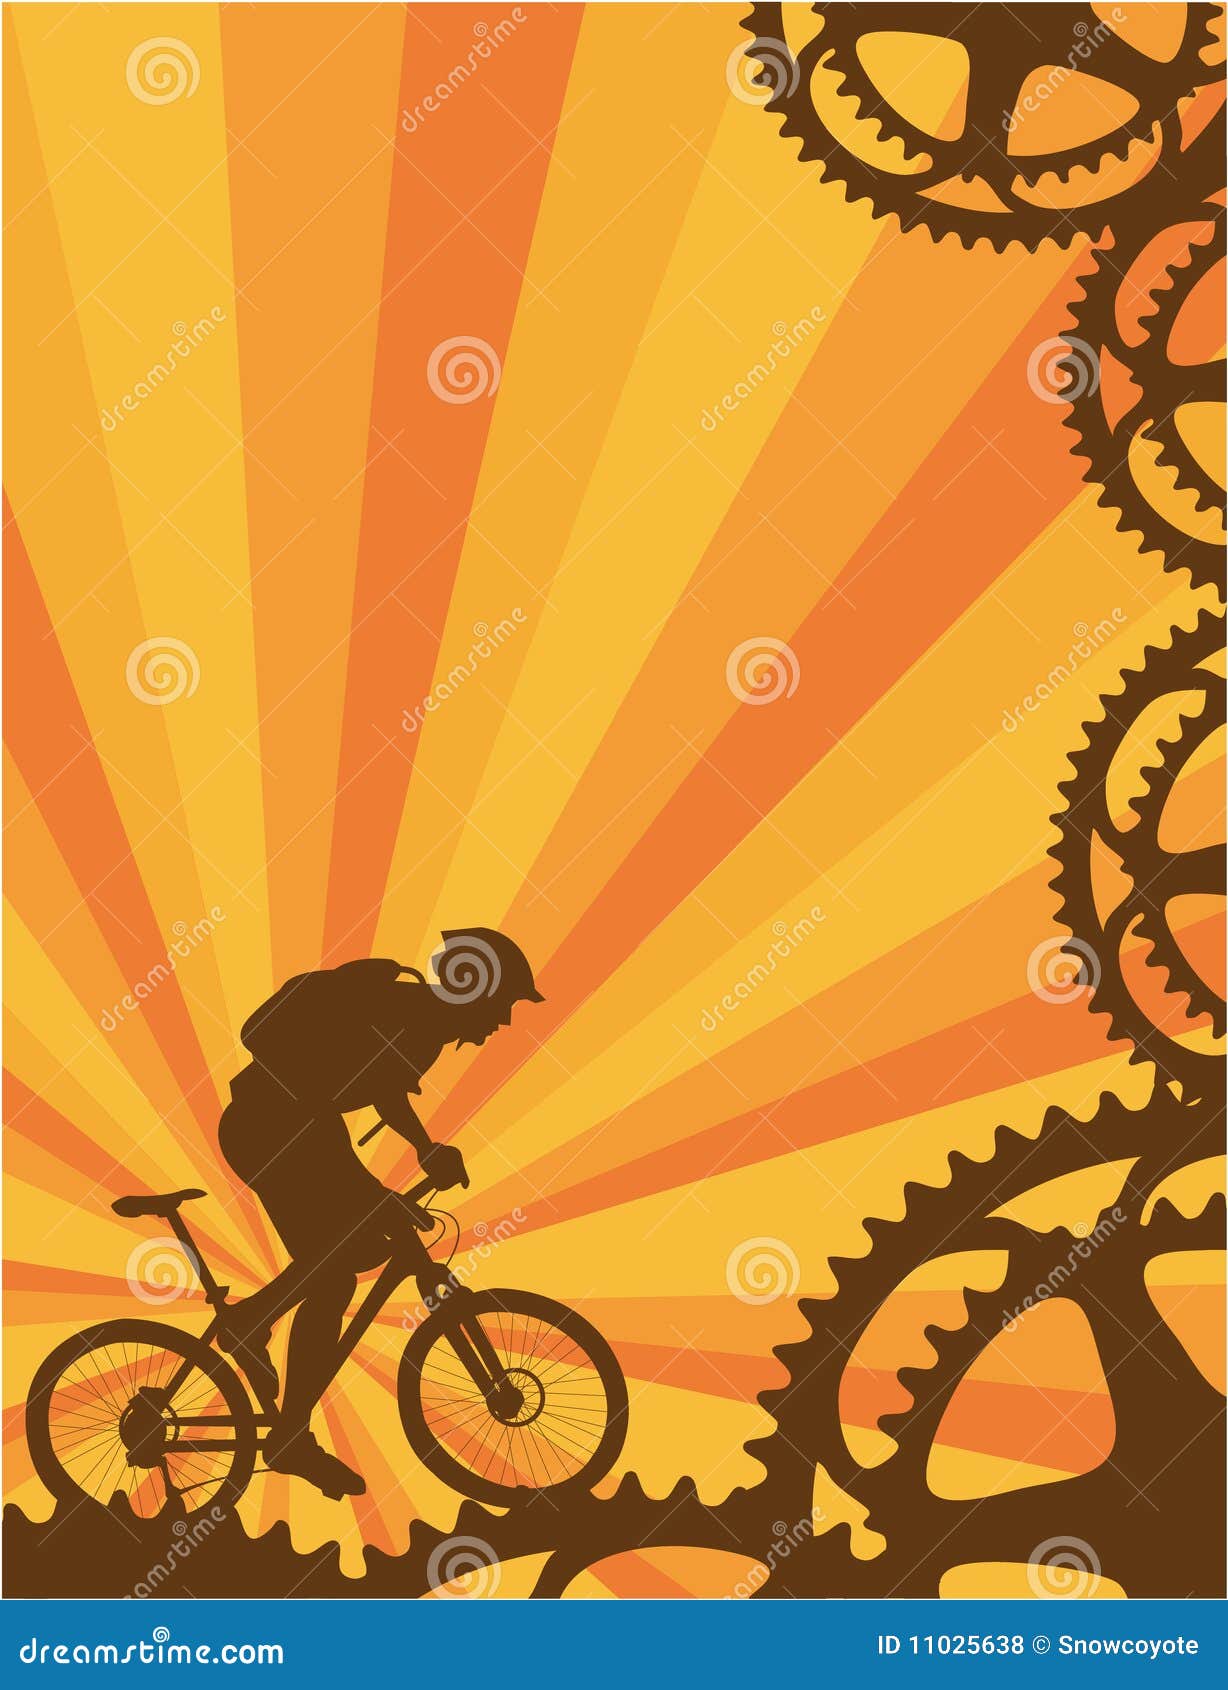 mountain bike wallpaper